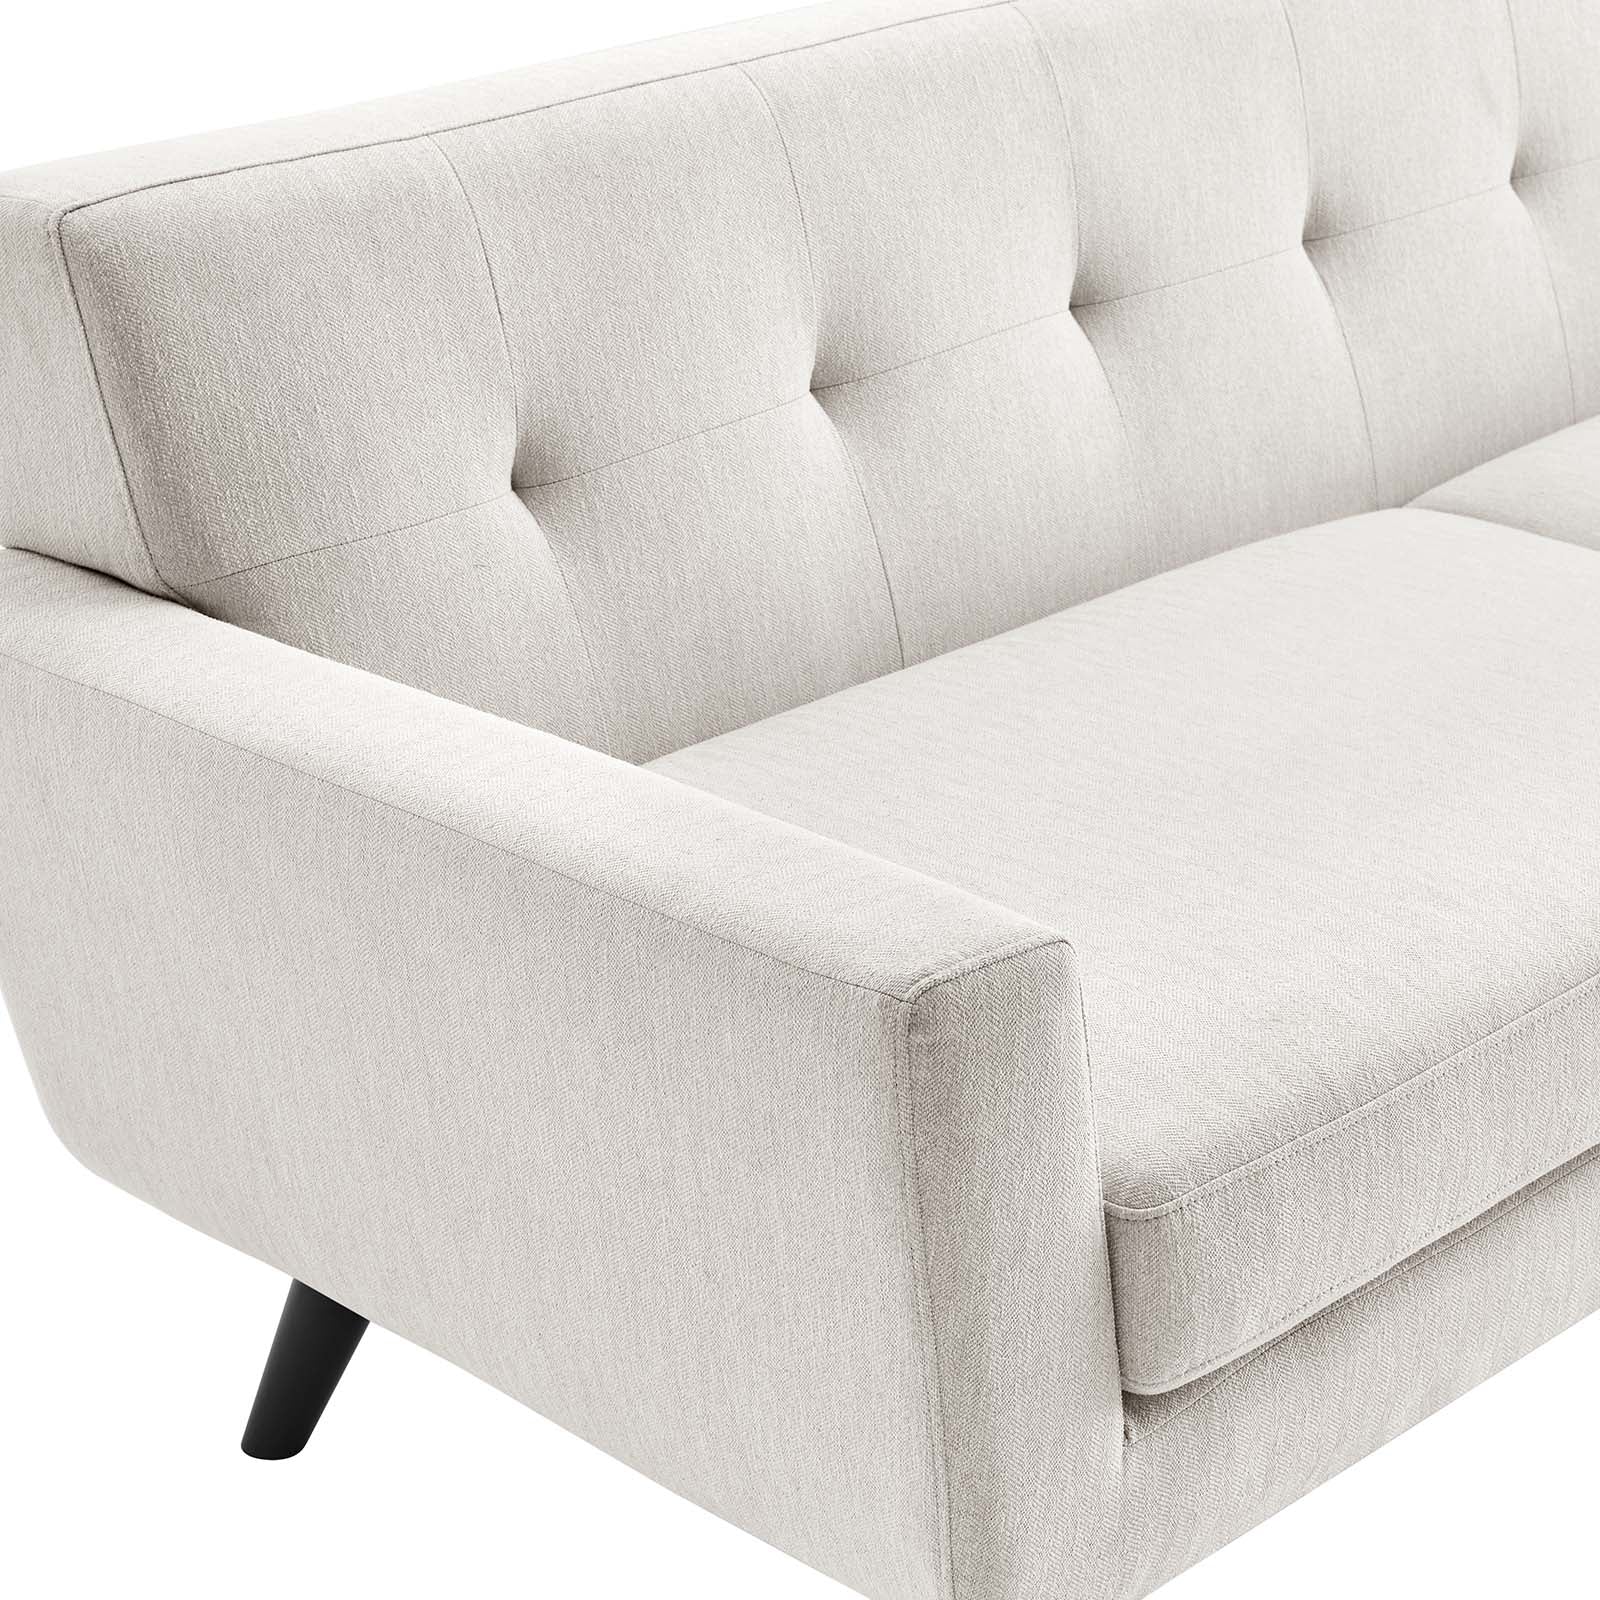 Engage Herringbone Fabric Sofa-Sofa-Modway-Wall2Wall Furnishings